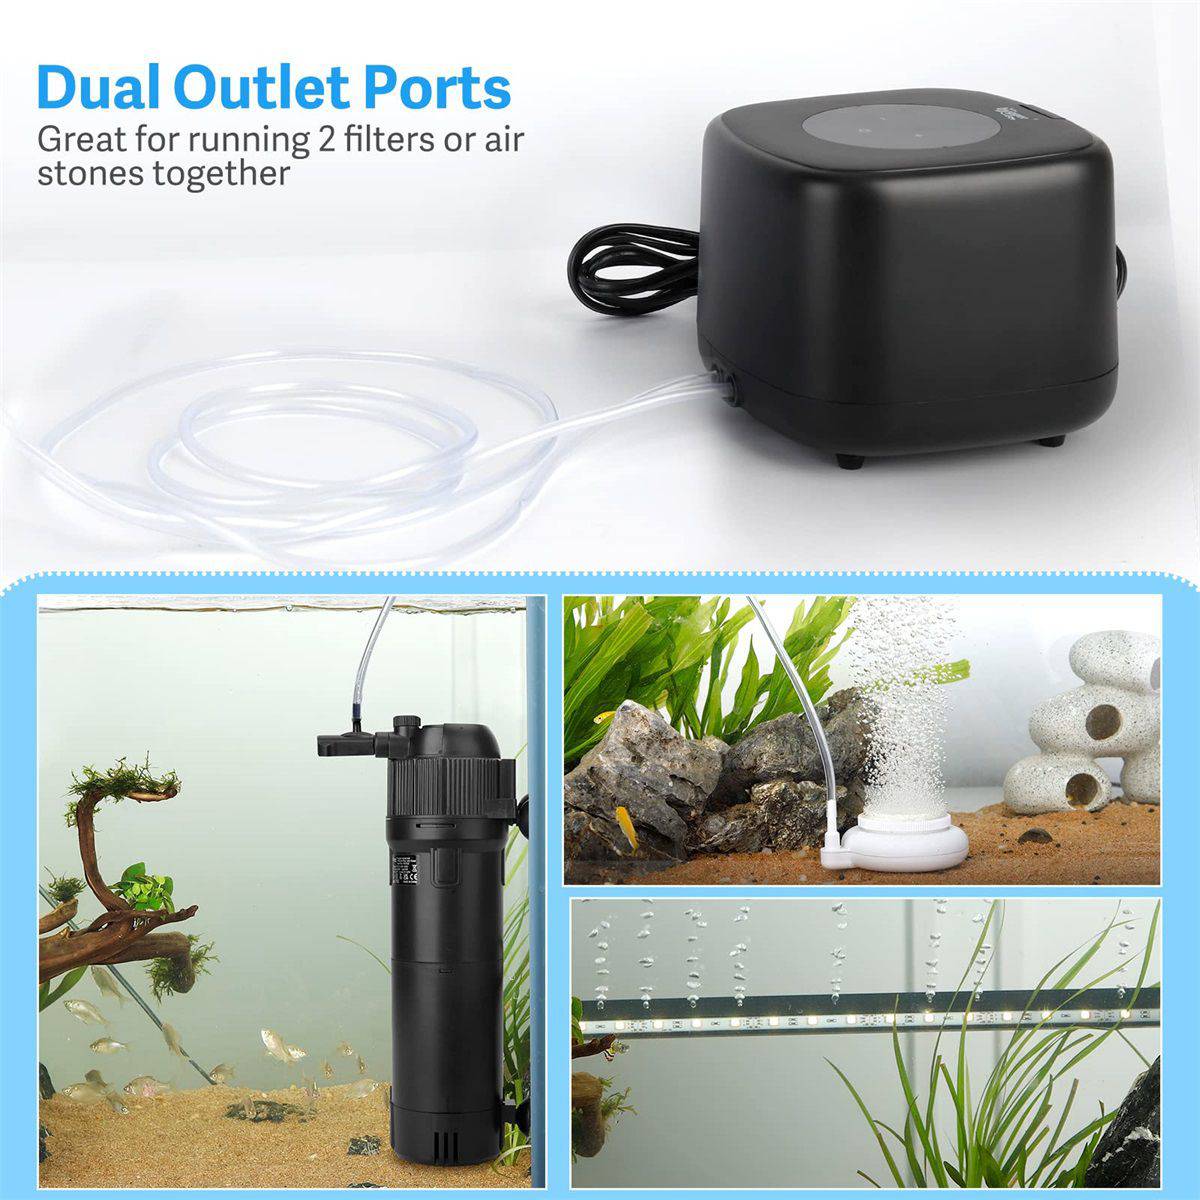 Hand Water Pump for Aquarium Home - hygger